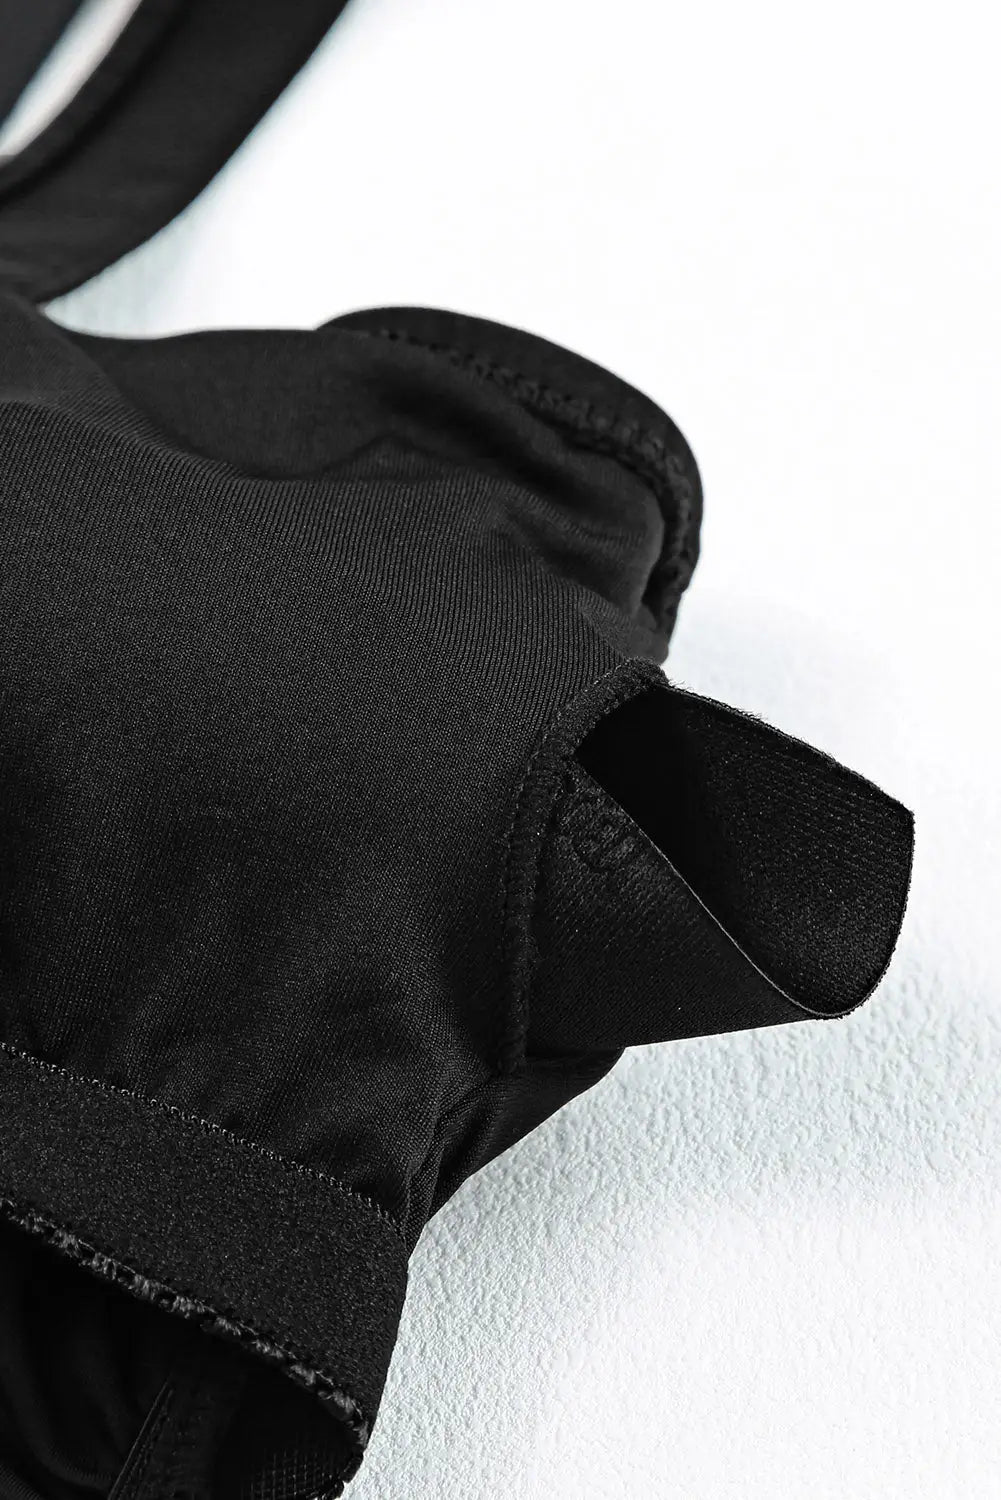 Black solid square neck sleeveless tankini swimsuit - tankinis